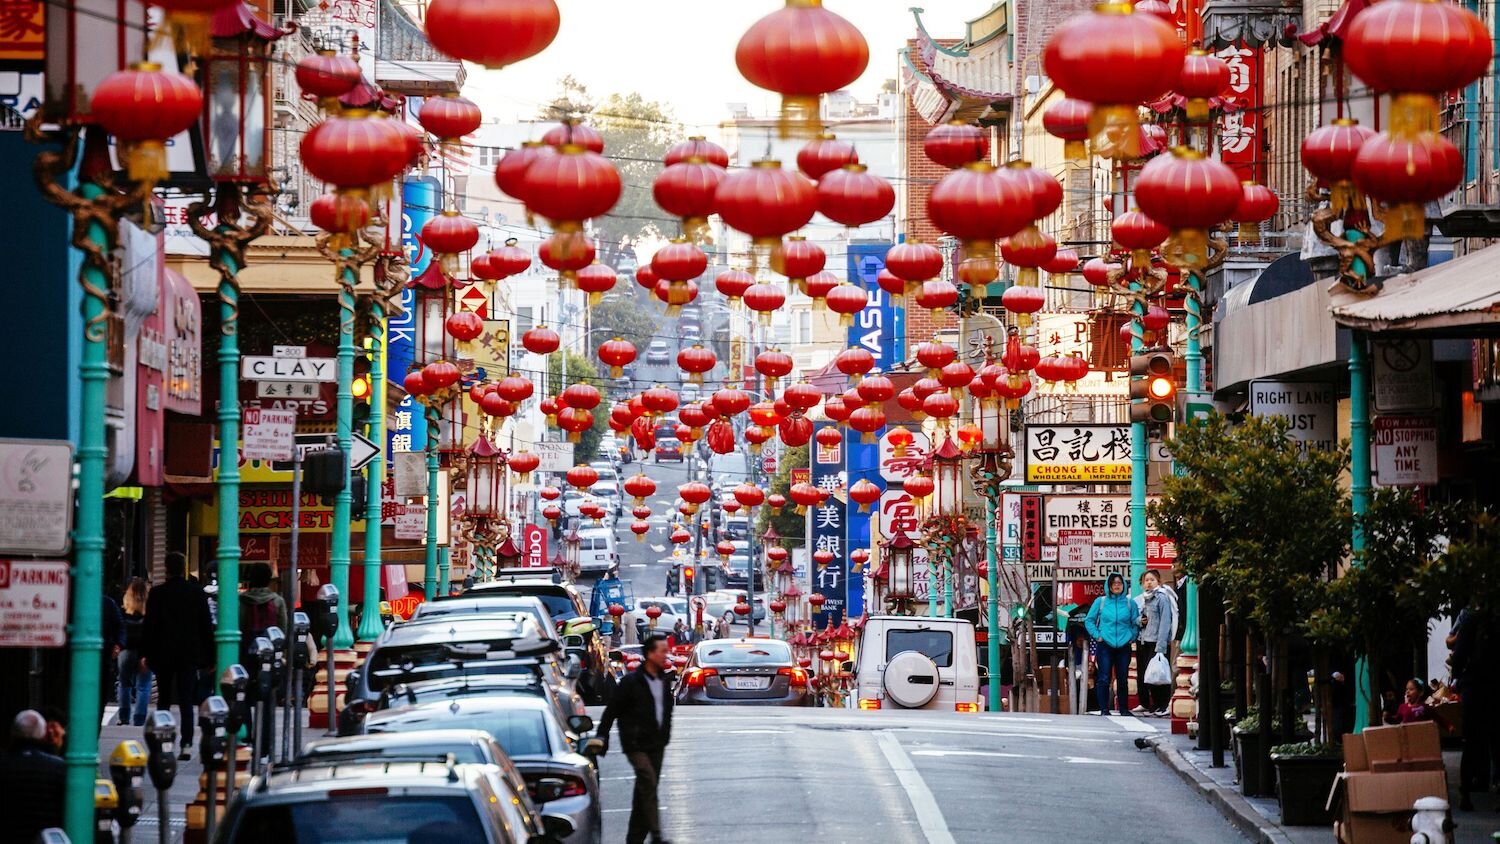 SF San Francisco chinatown